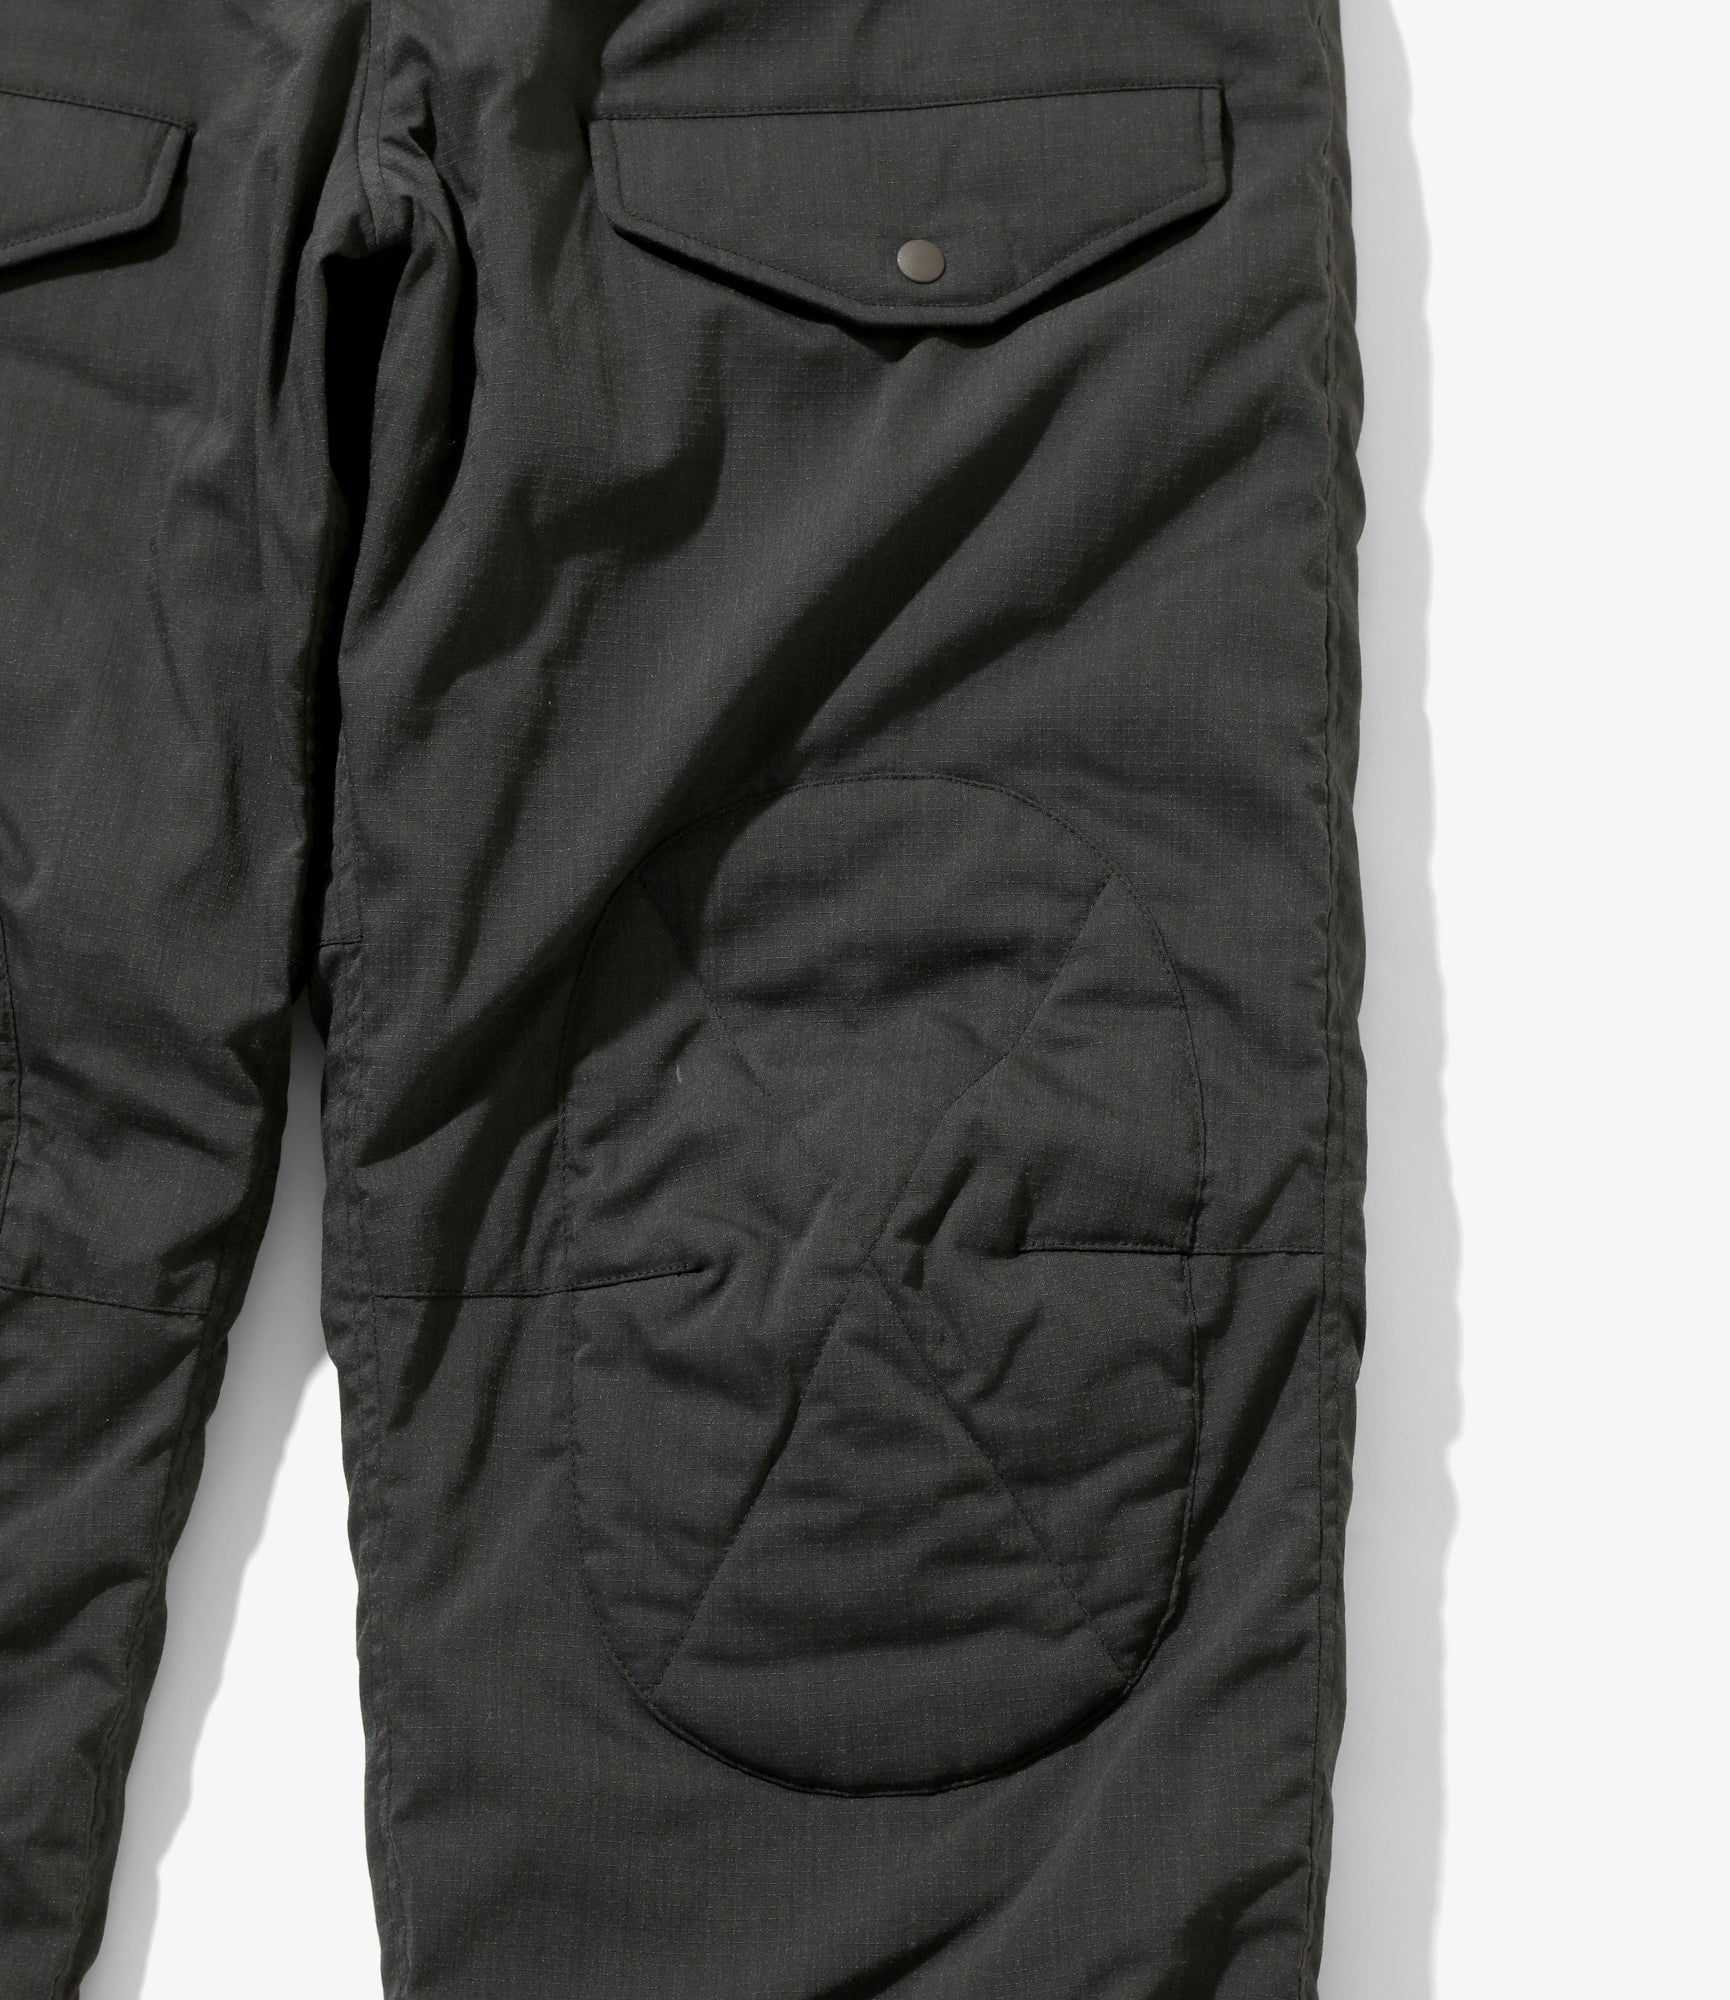 NWT Under Armour polyester Storm pants, men's M, black, $130, pockets | eBay